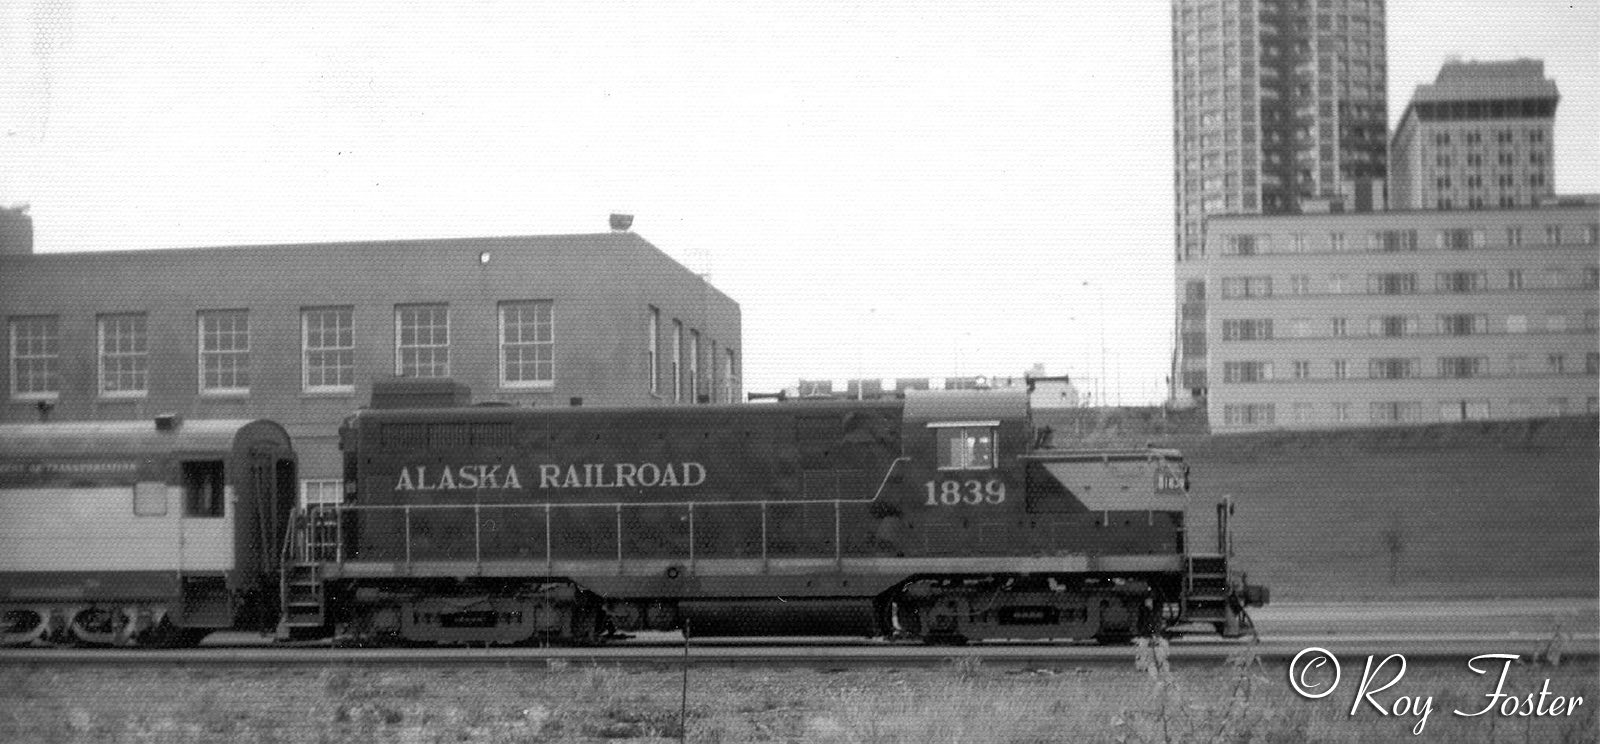 ARR 1839, Anchorage, 9-11-73